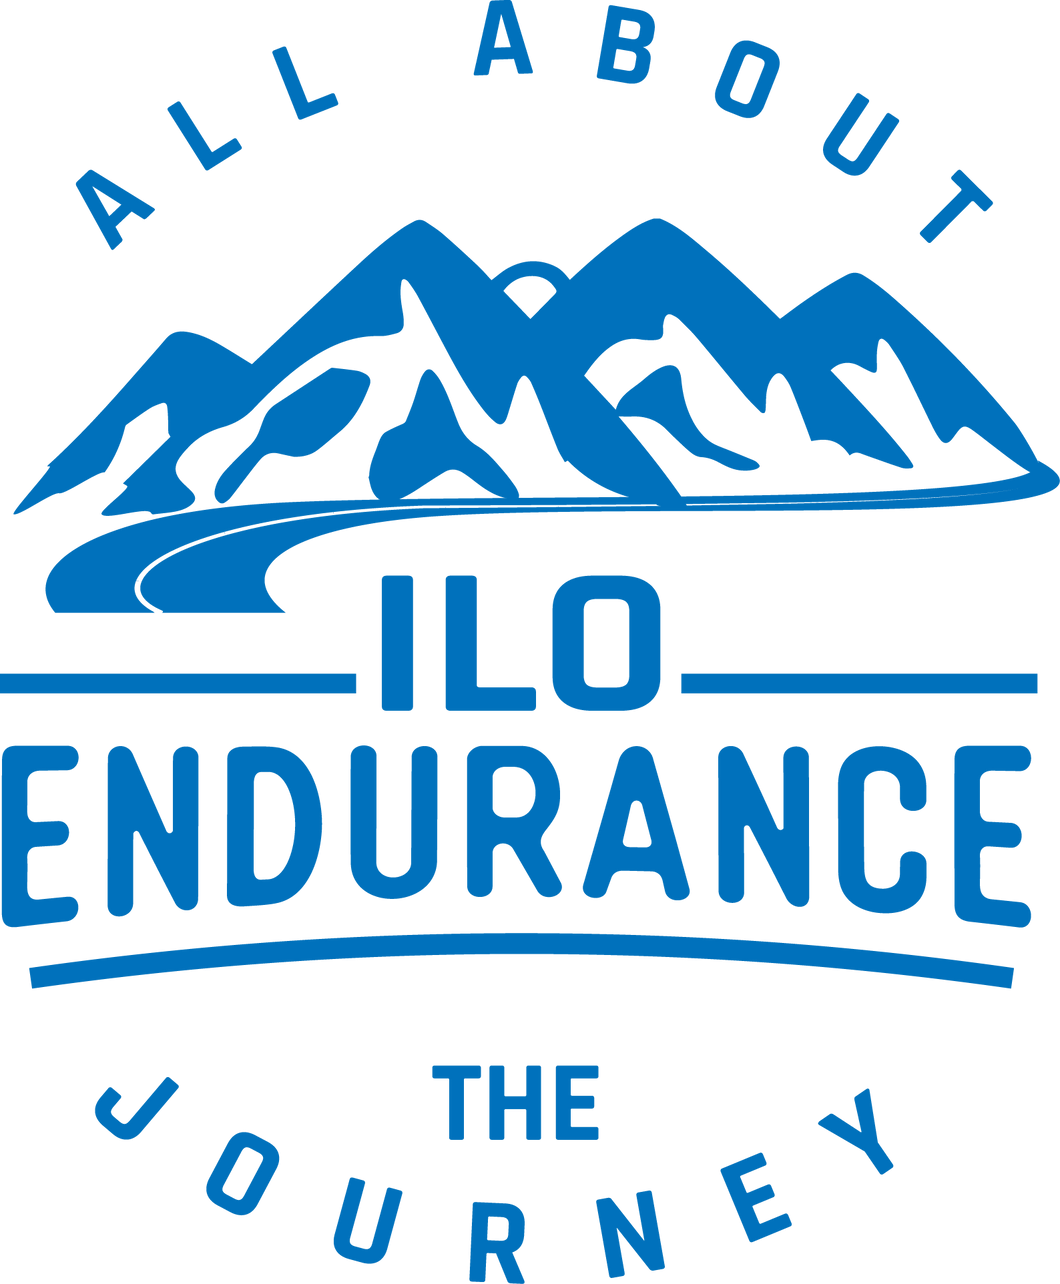 Gift Card - ILO Endurance